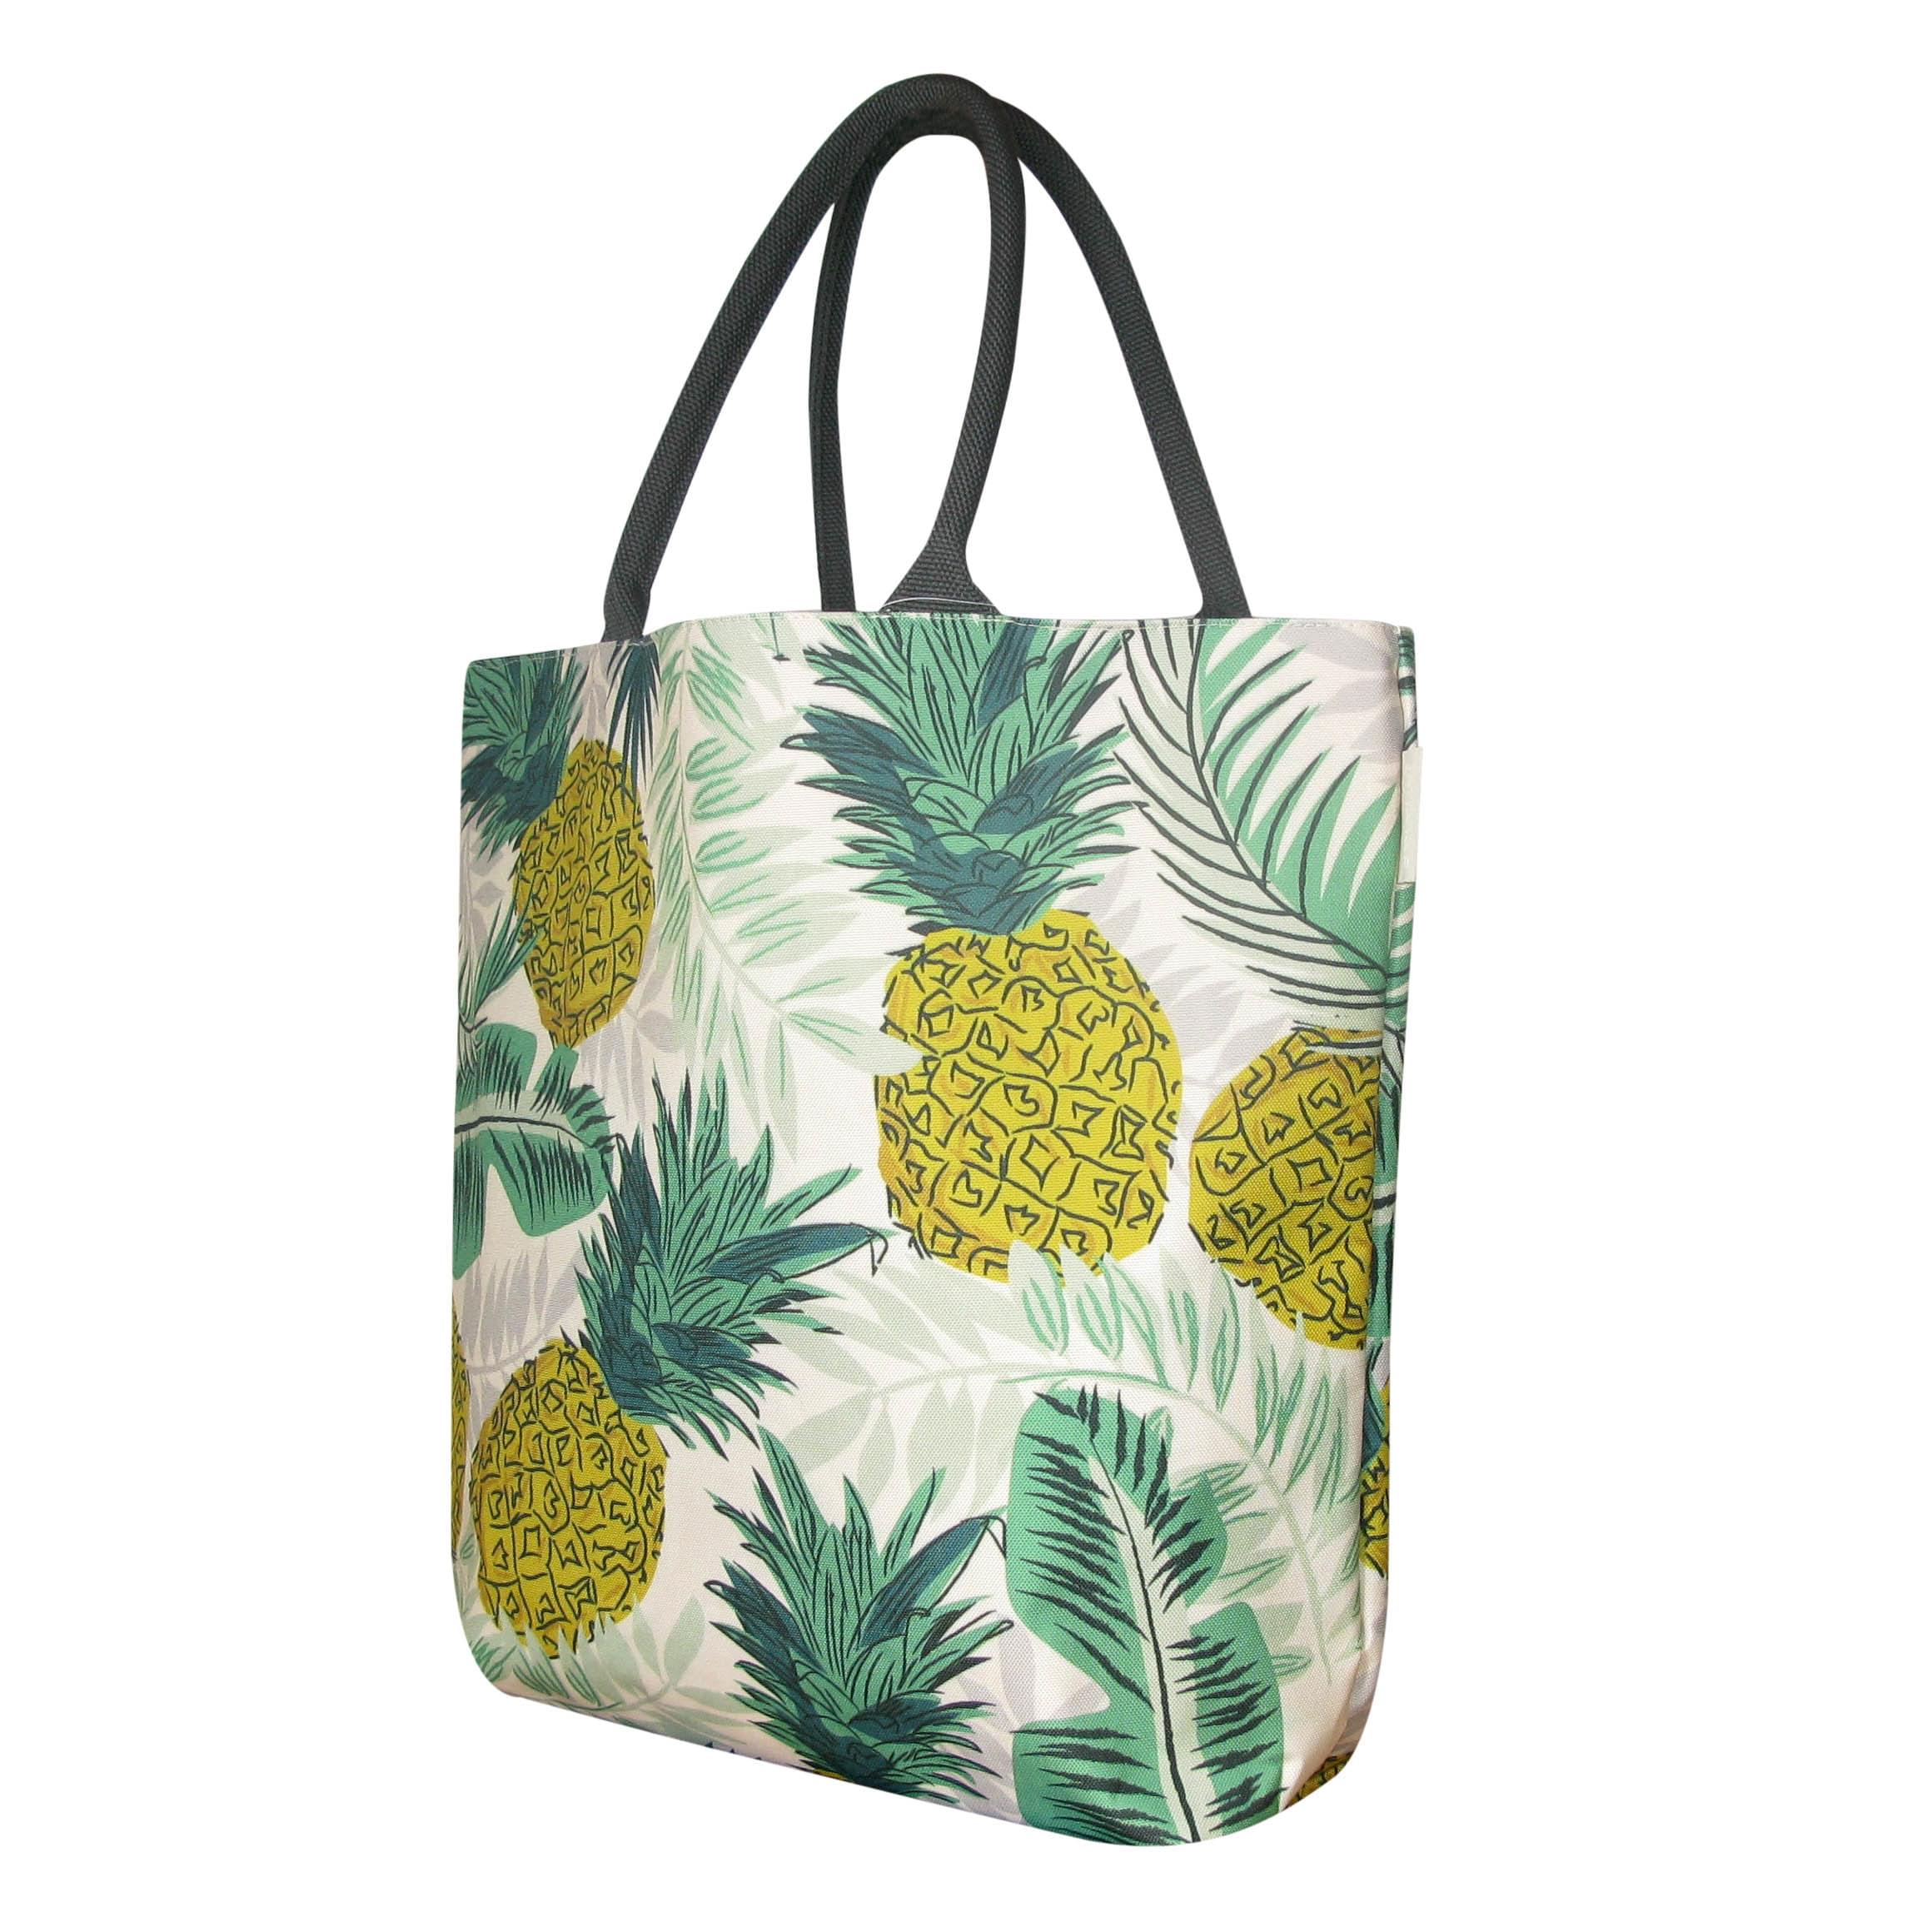 Designers - John Lewis and Partners shopping bag, designed by Caroline Gardner